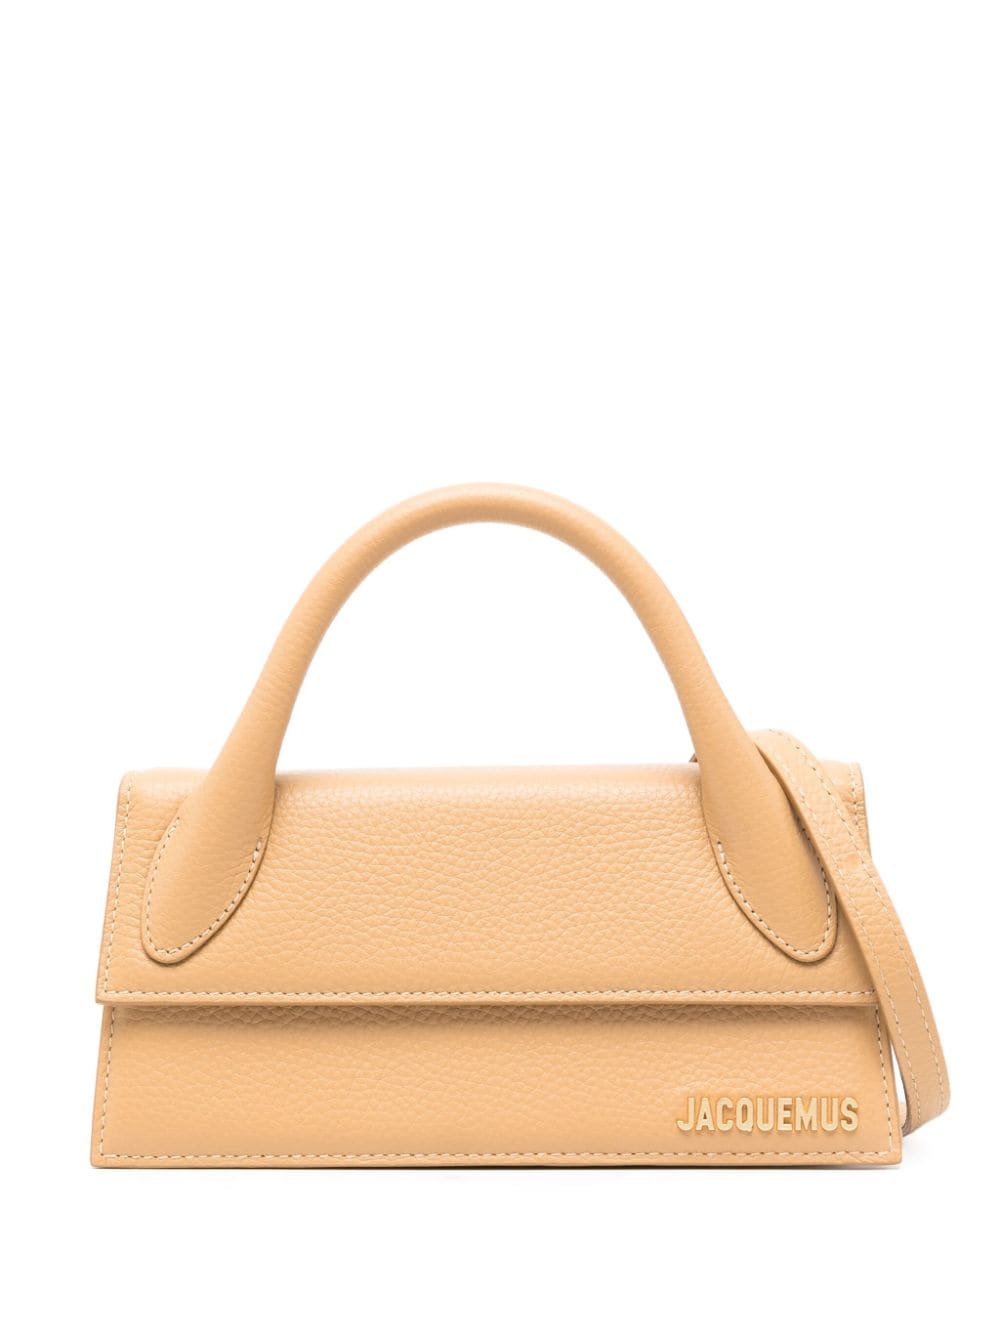 Jacquemus Le Chiquito Long Leather Handbag